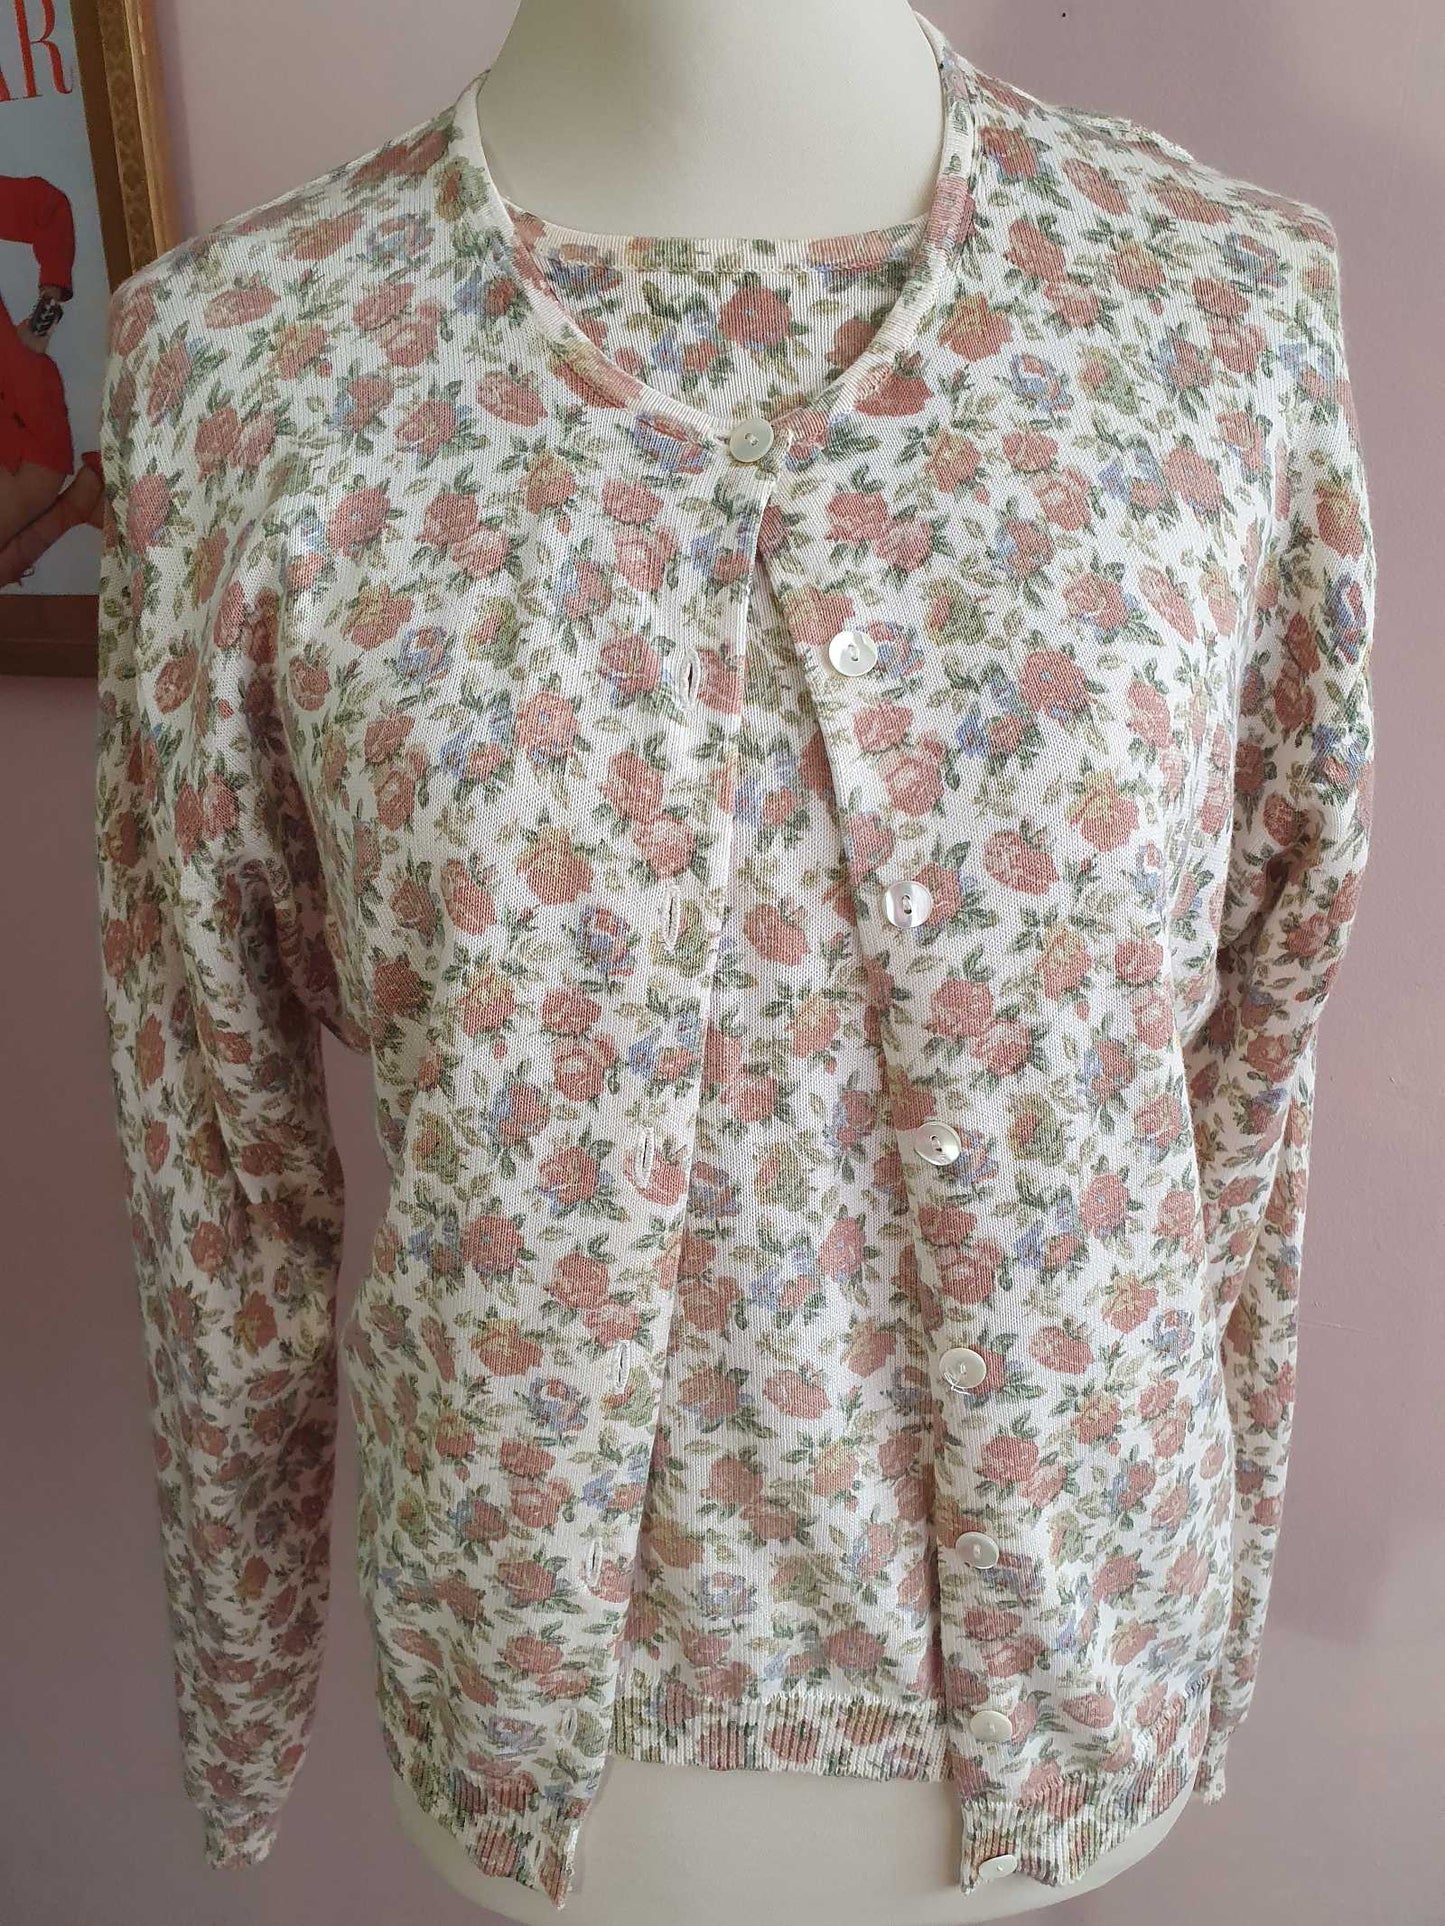 Vintage Laura Ashley Rose Twinset Top & Cardigan Size 16/18 English Classics